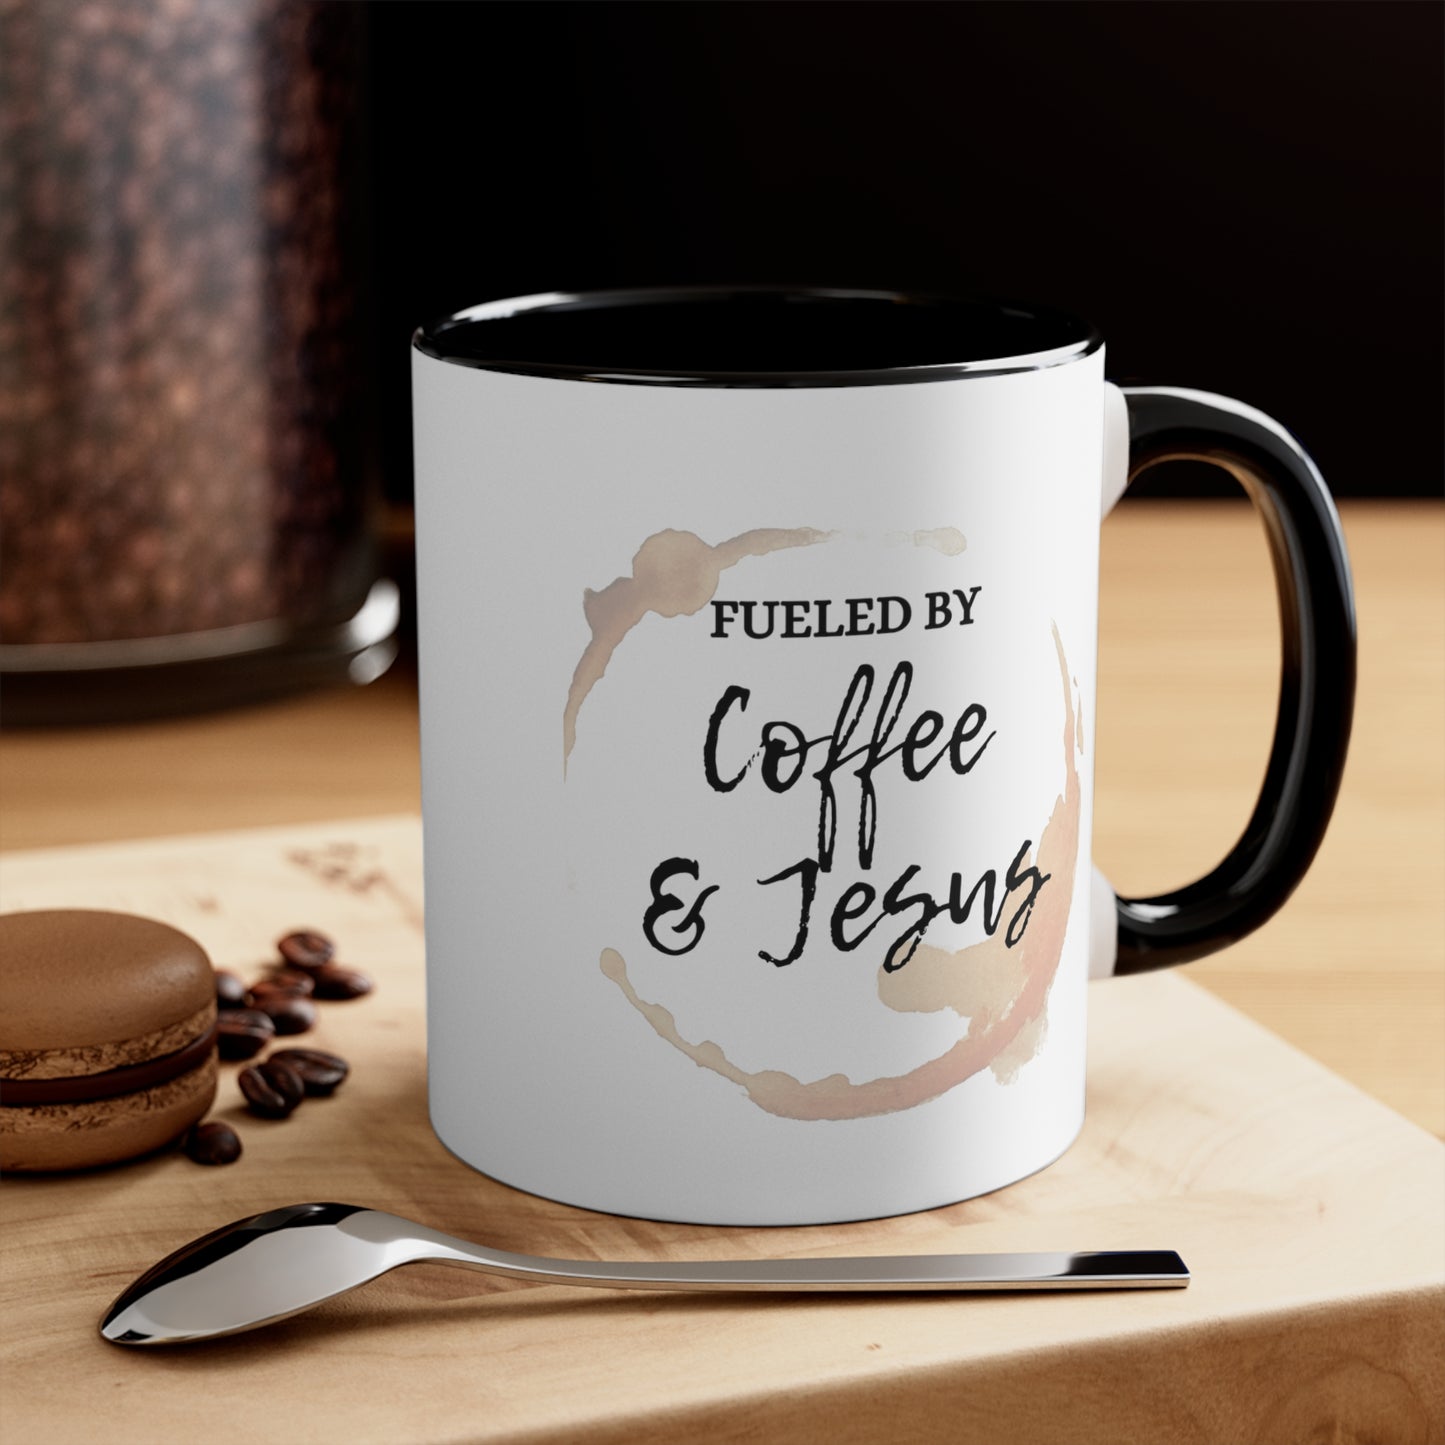 Fueled by Coffee & Jesus Motivational Coffee Mug, 11oz